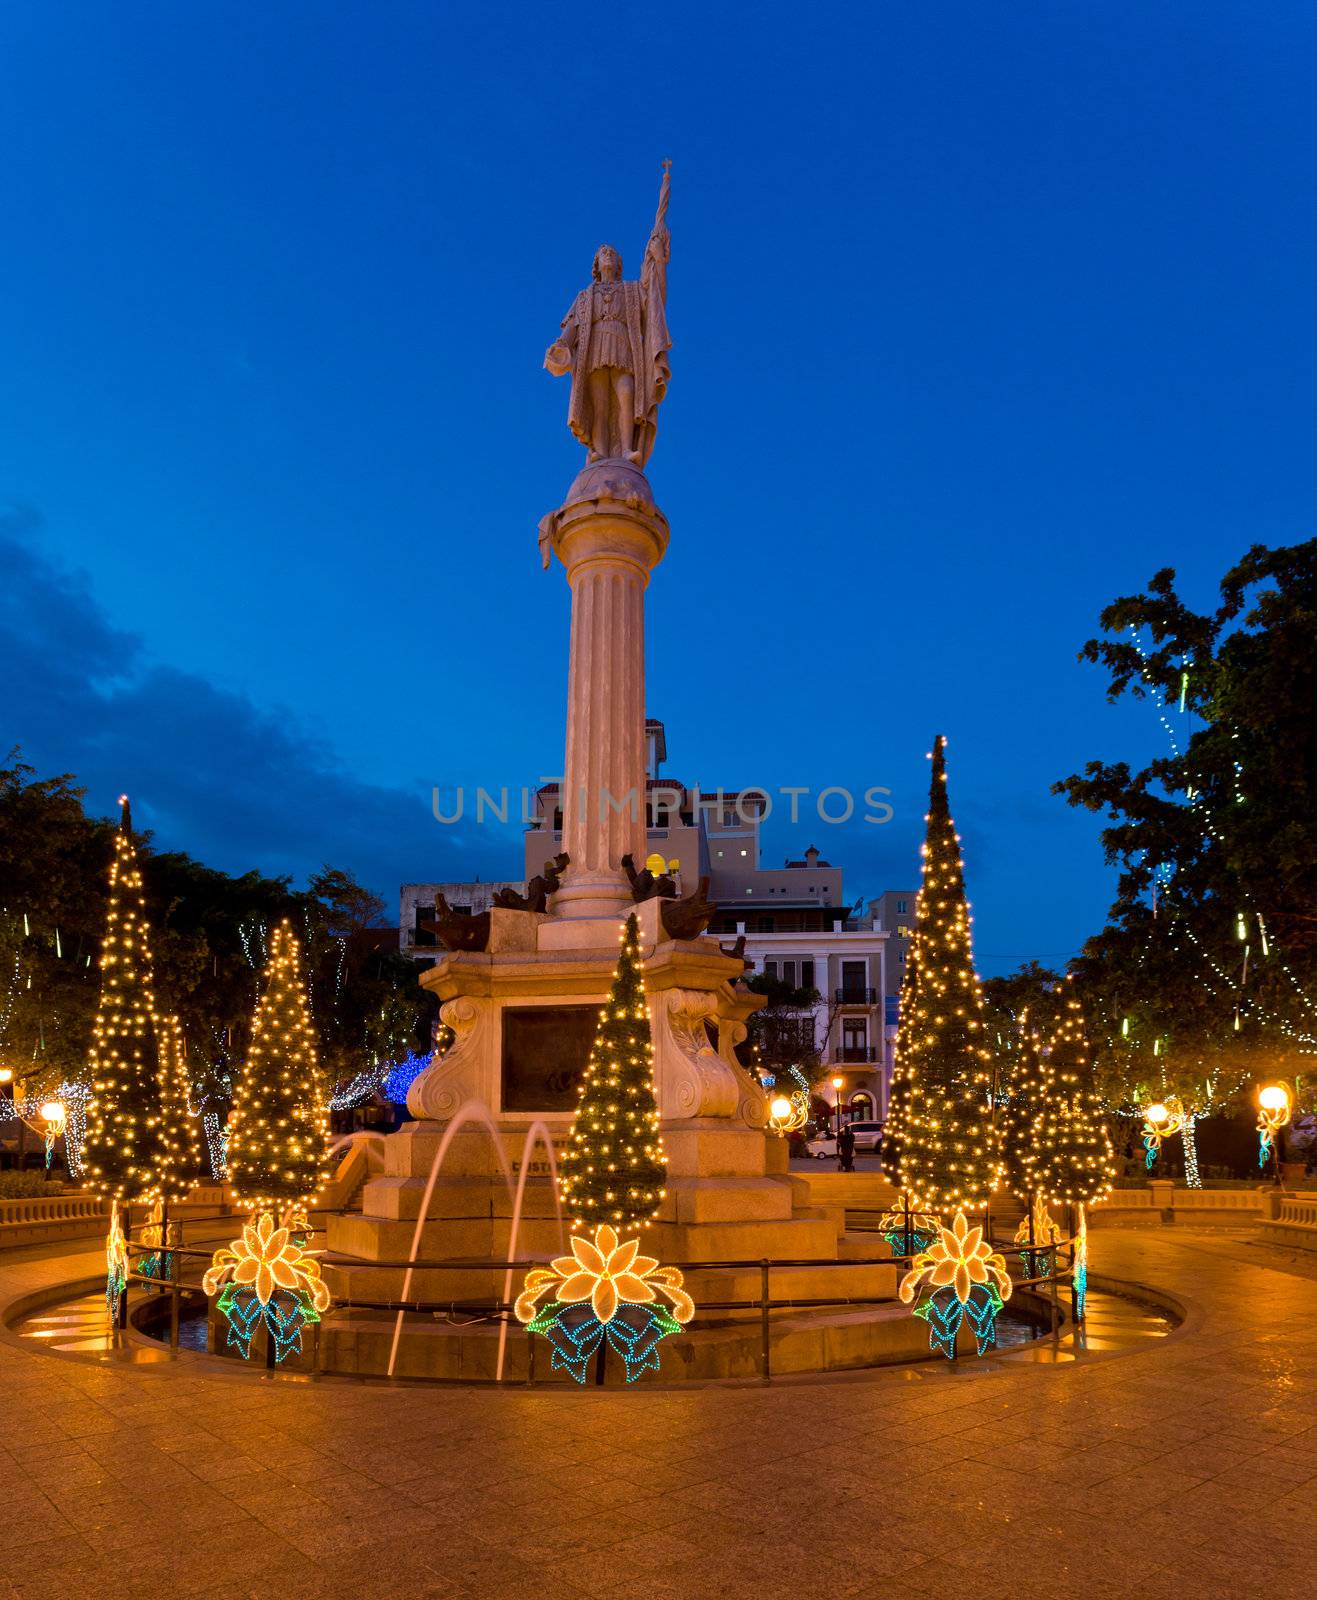 Christmas in San Juan by steheap